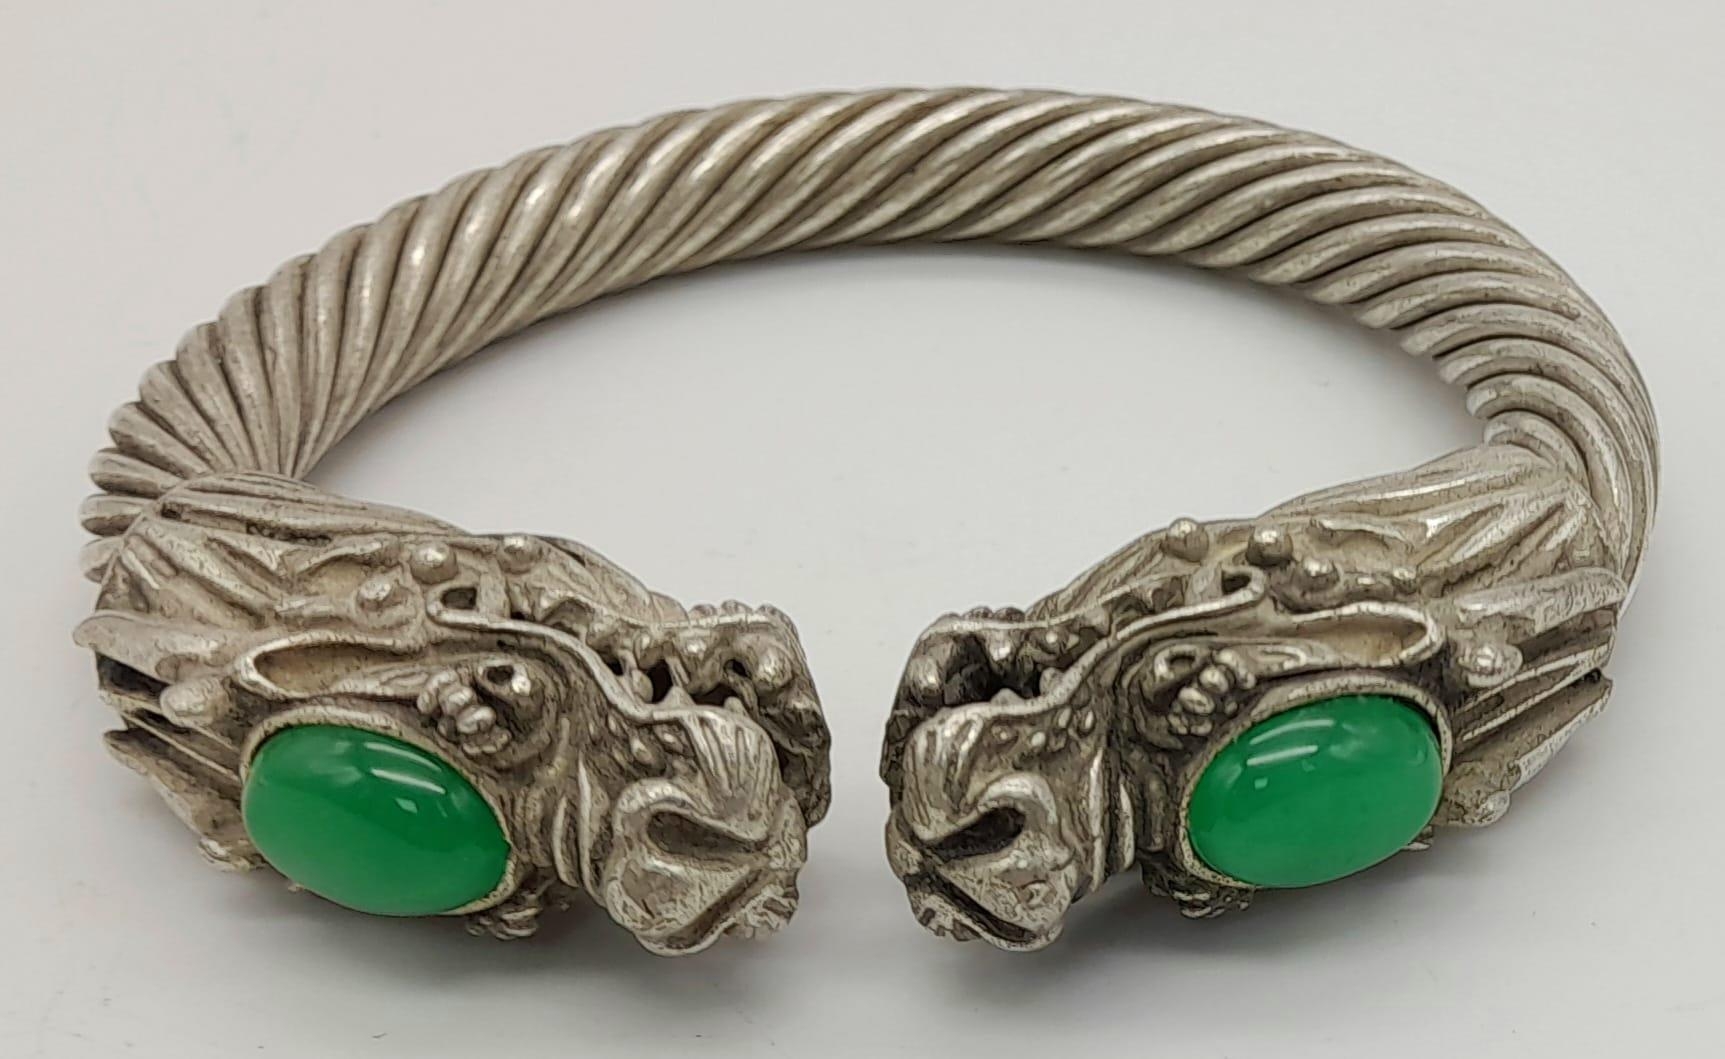 A Tibetan Silver Twin Dragon Twisted Bangle/Bracelet with Green Jade head decoration. 7cm inner